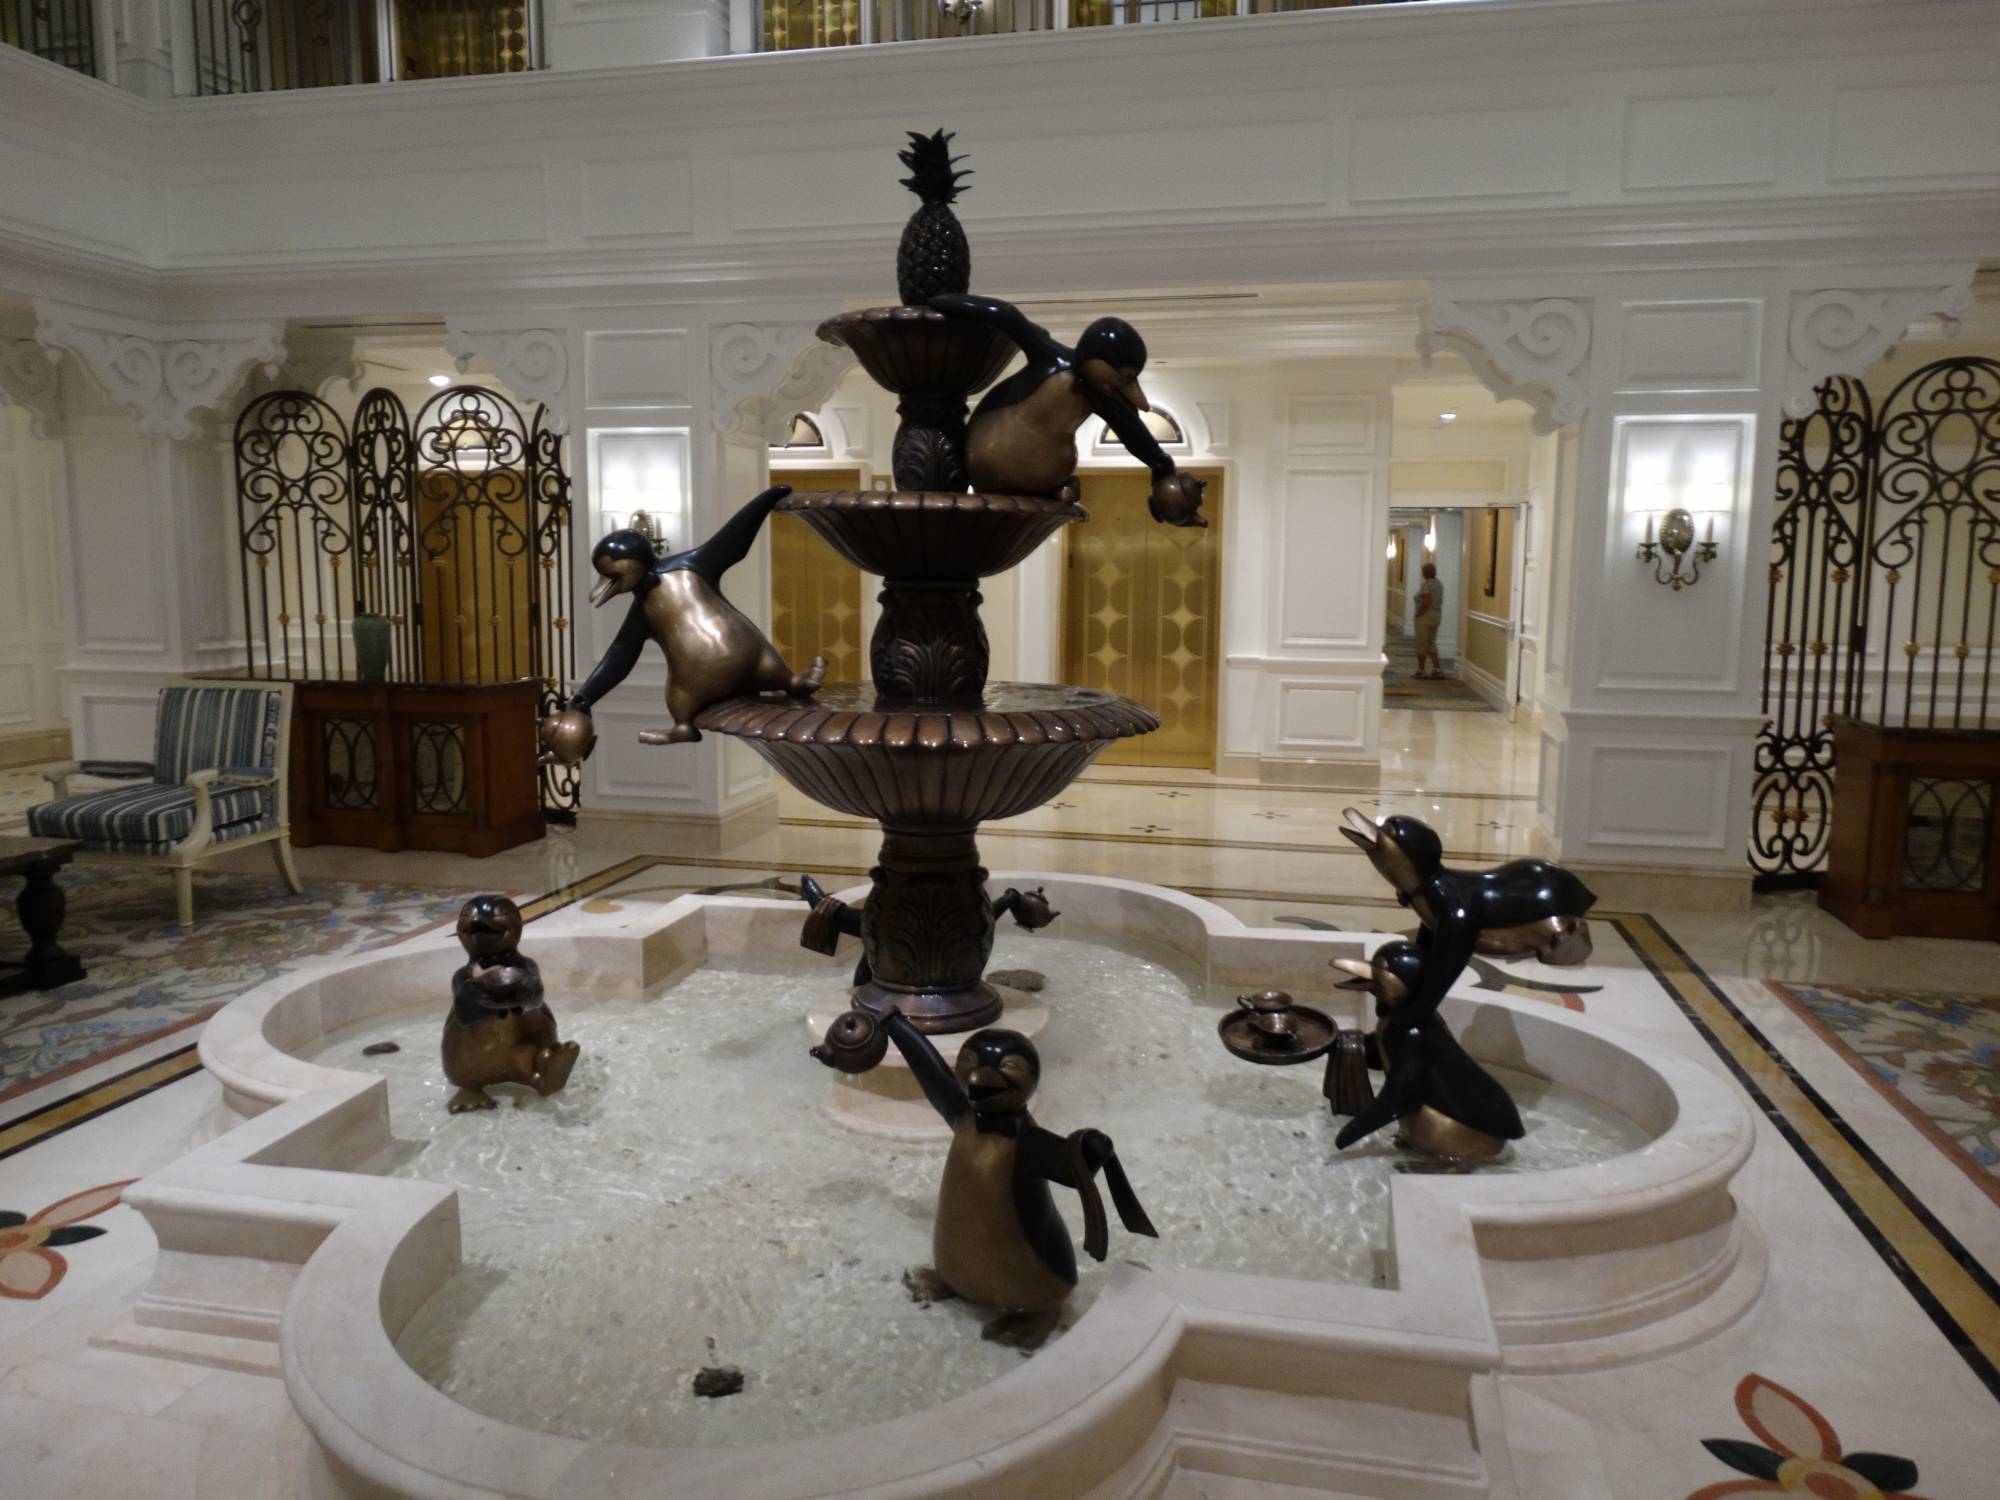 Grand Floridian Villas - lobby fountain